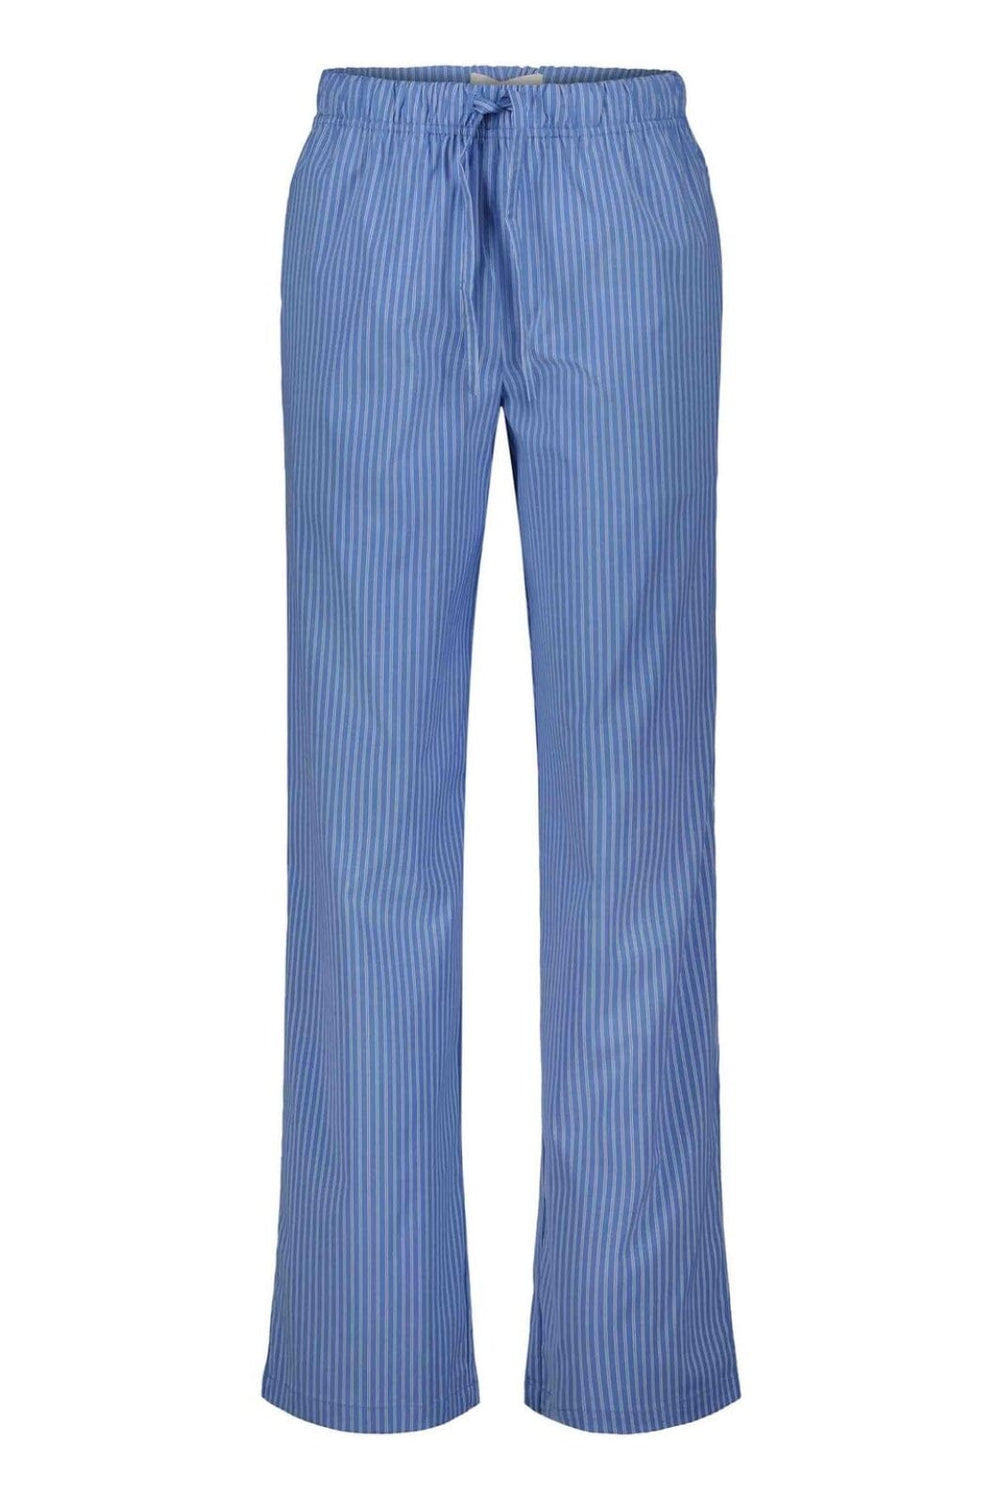 Sofie Schnoor - S241471 Trousers - Blue Striped Bukser 